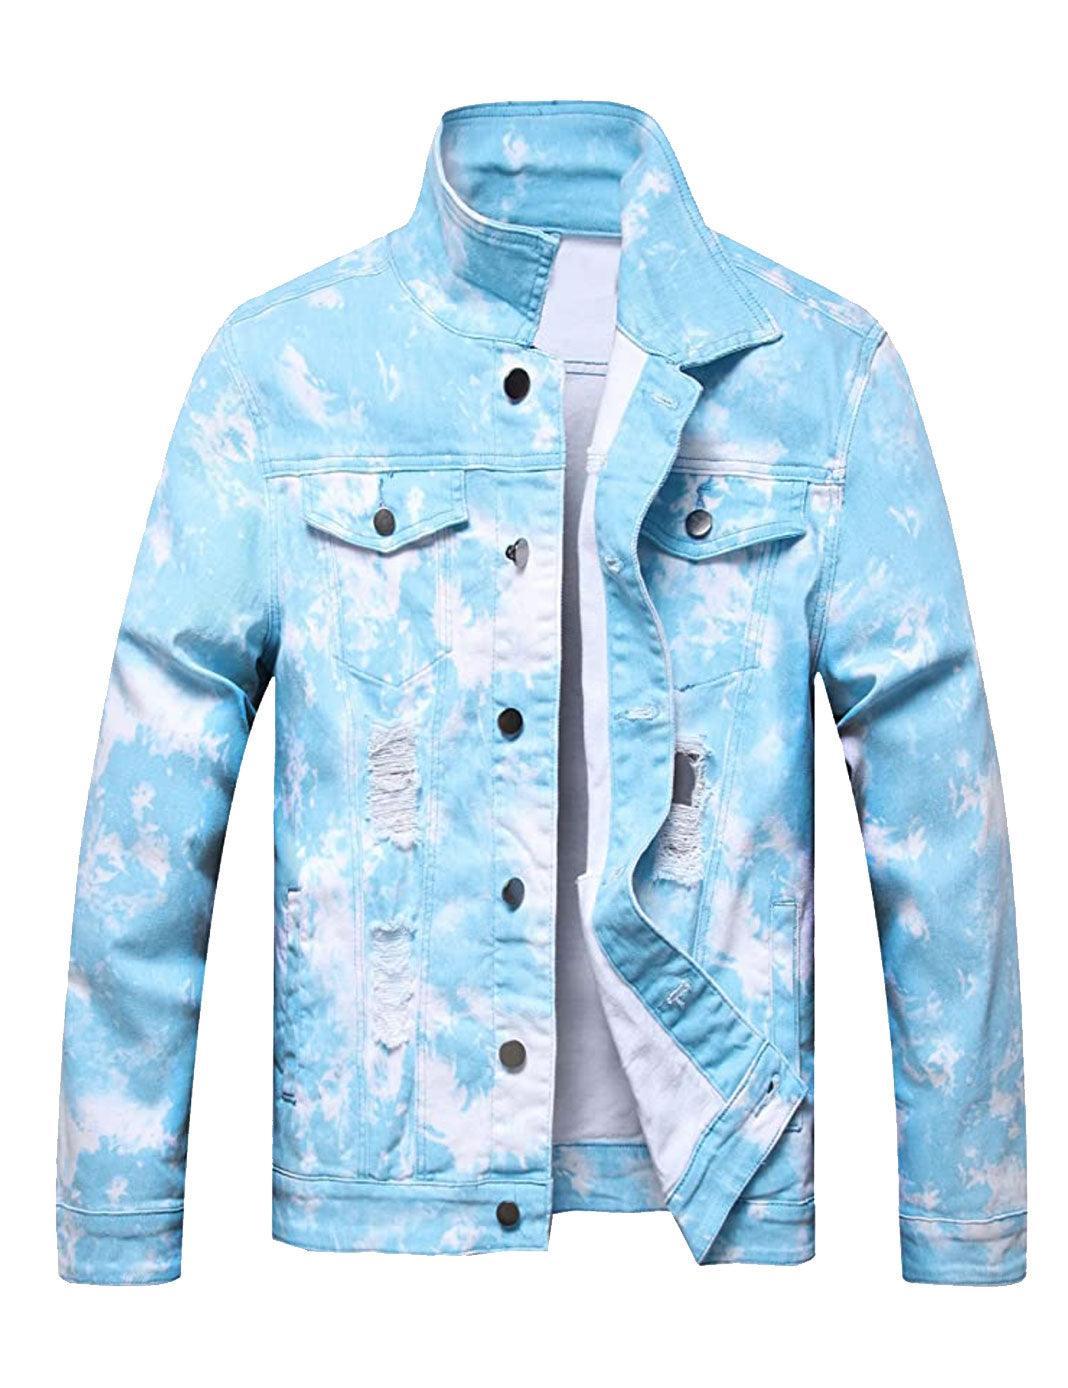 Blank Cloudy Blue Denim Jacket - Constantly Create Shop